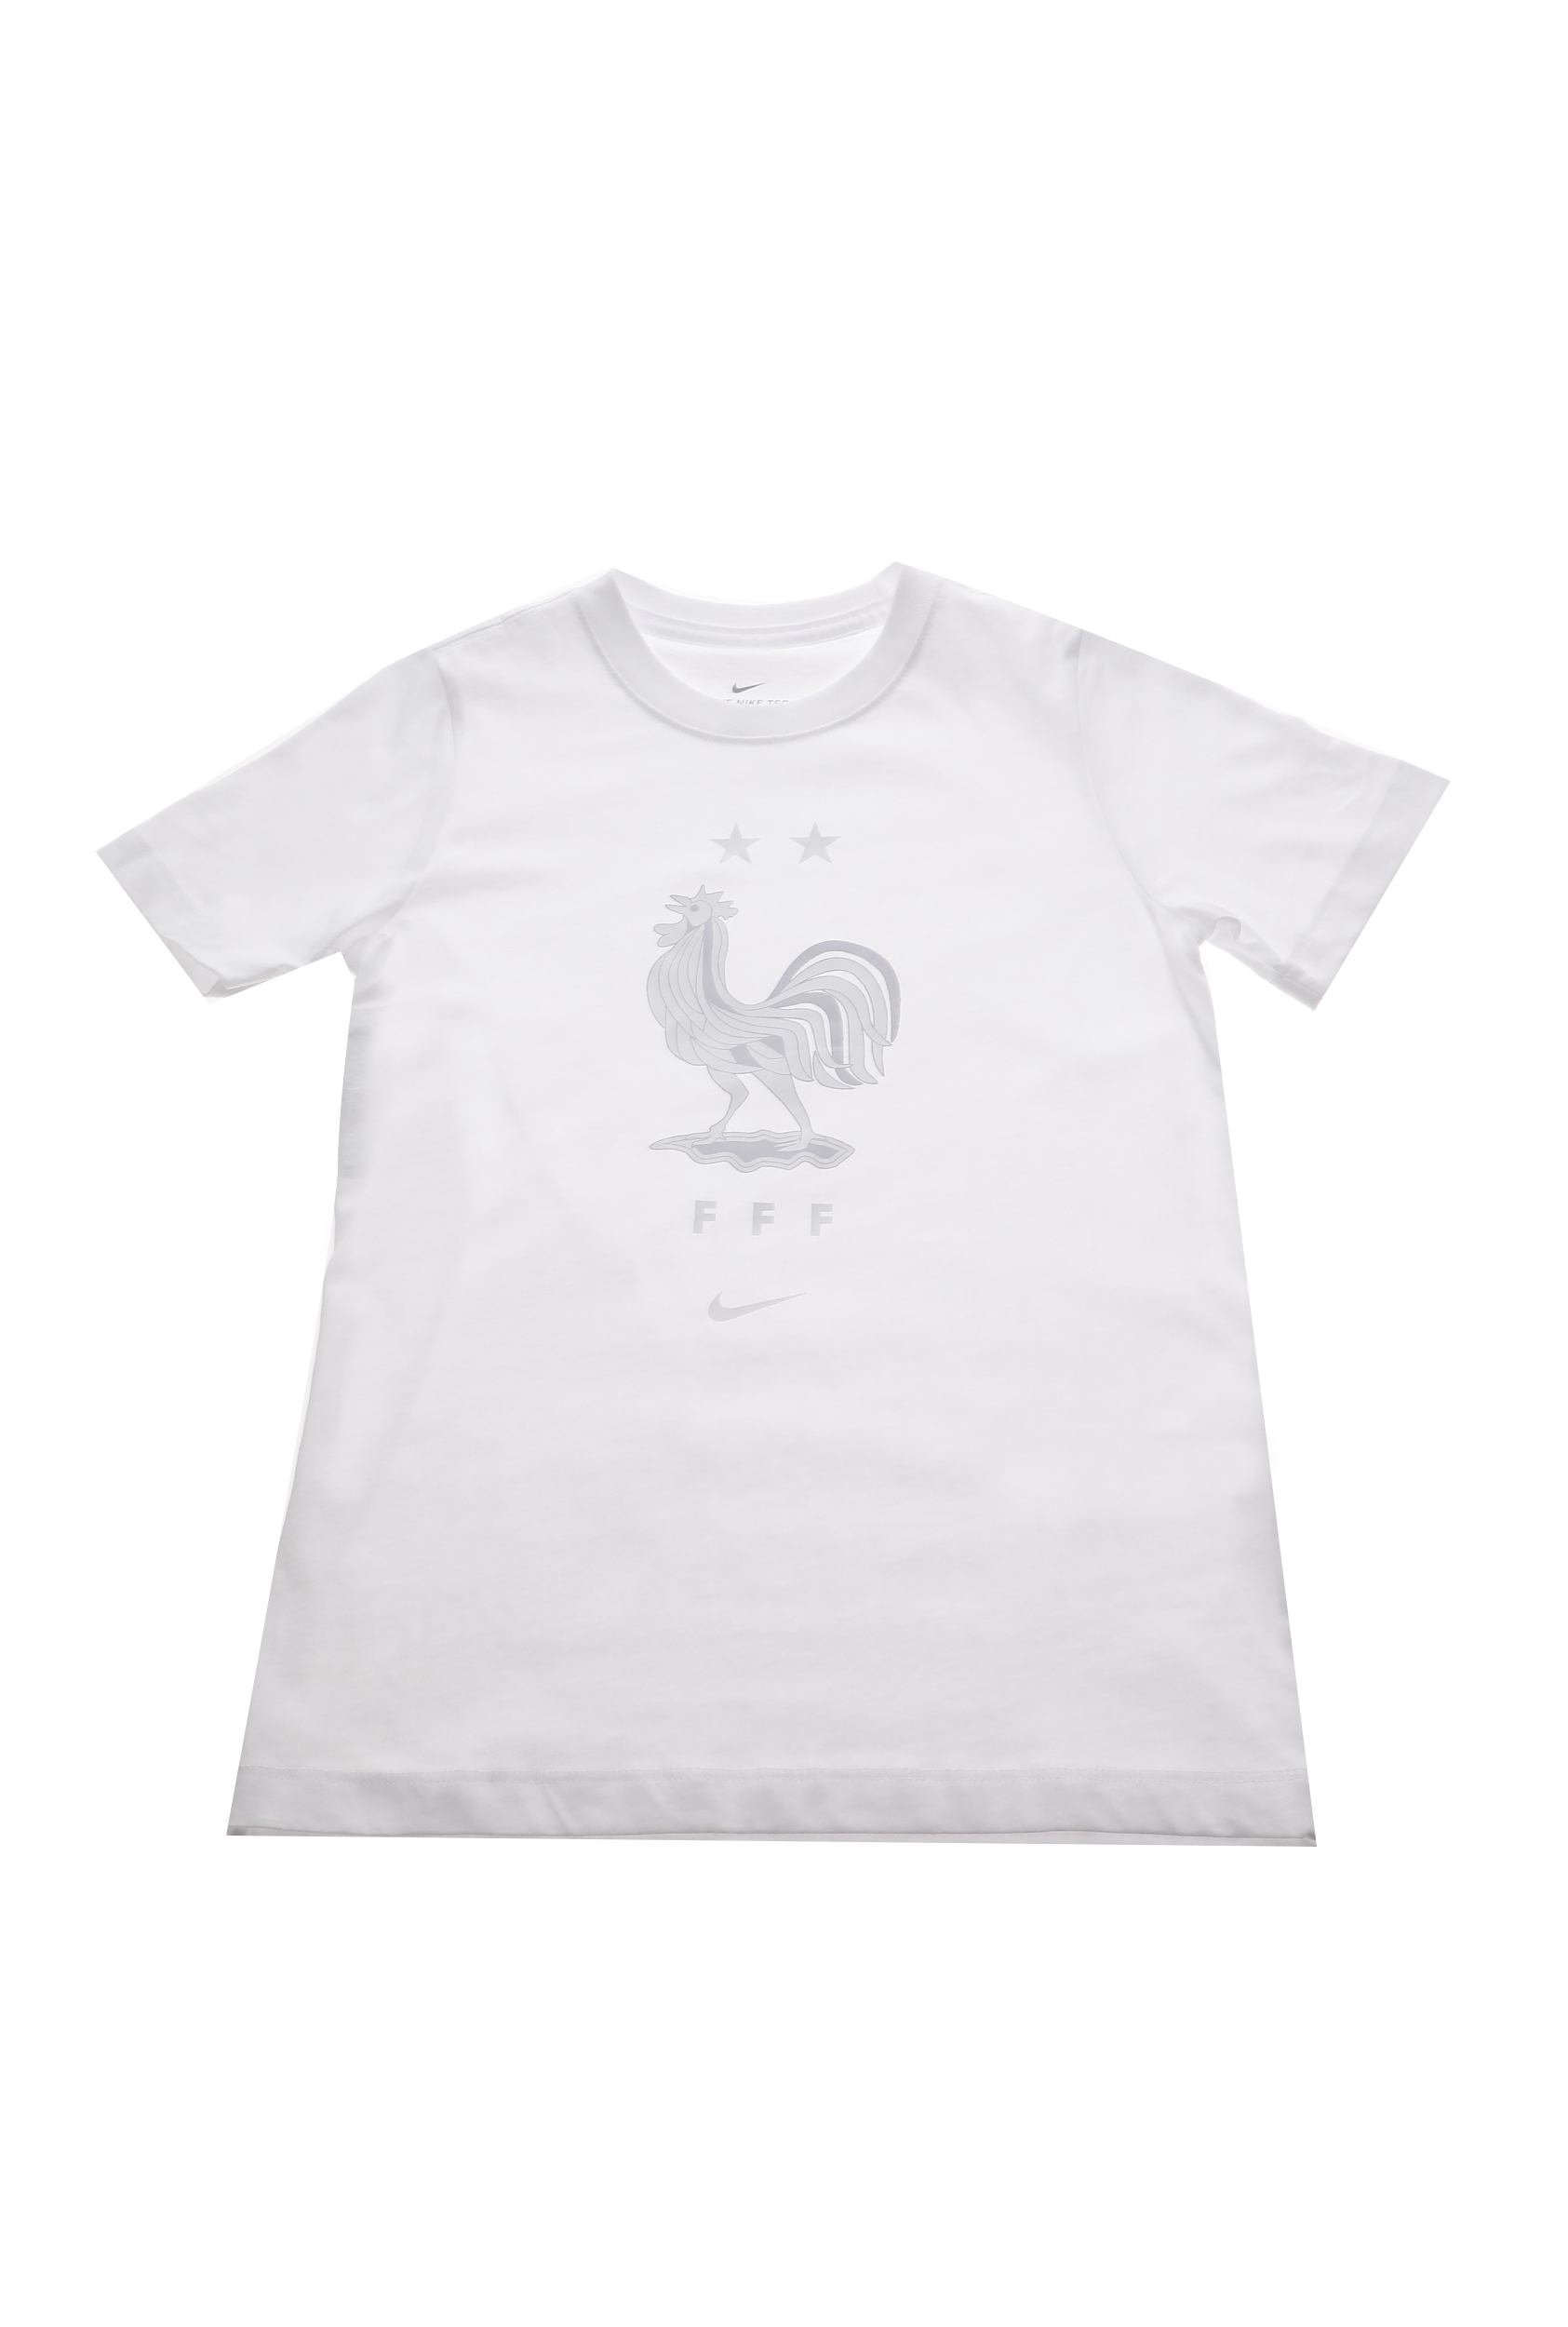 NIKE Παιδικό t-shirt ΝΙΚΕ FFF EVERGREEN CREST λευκό